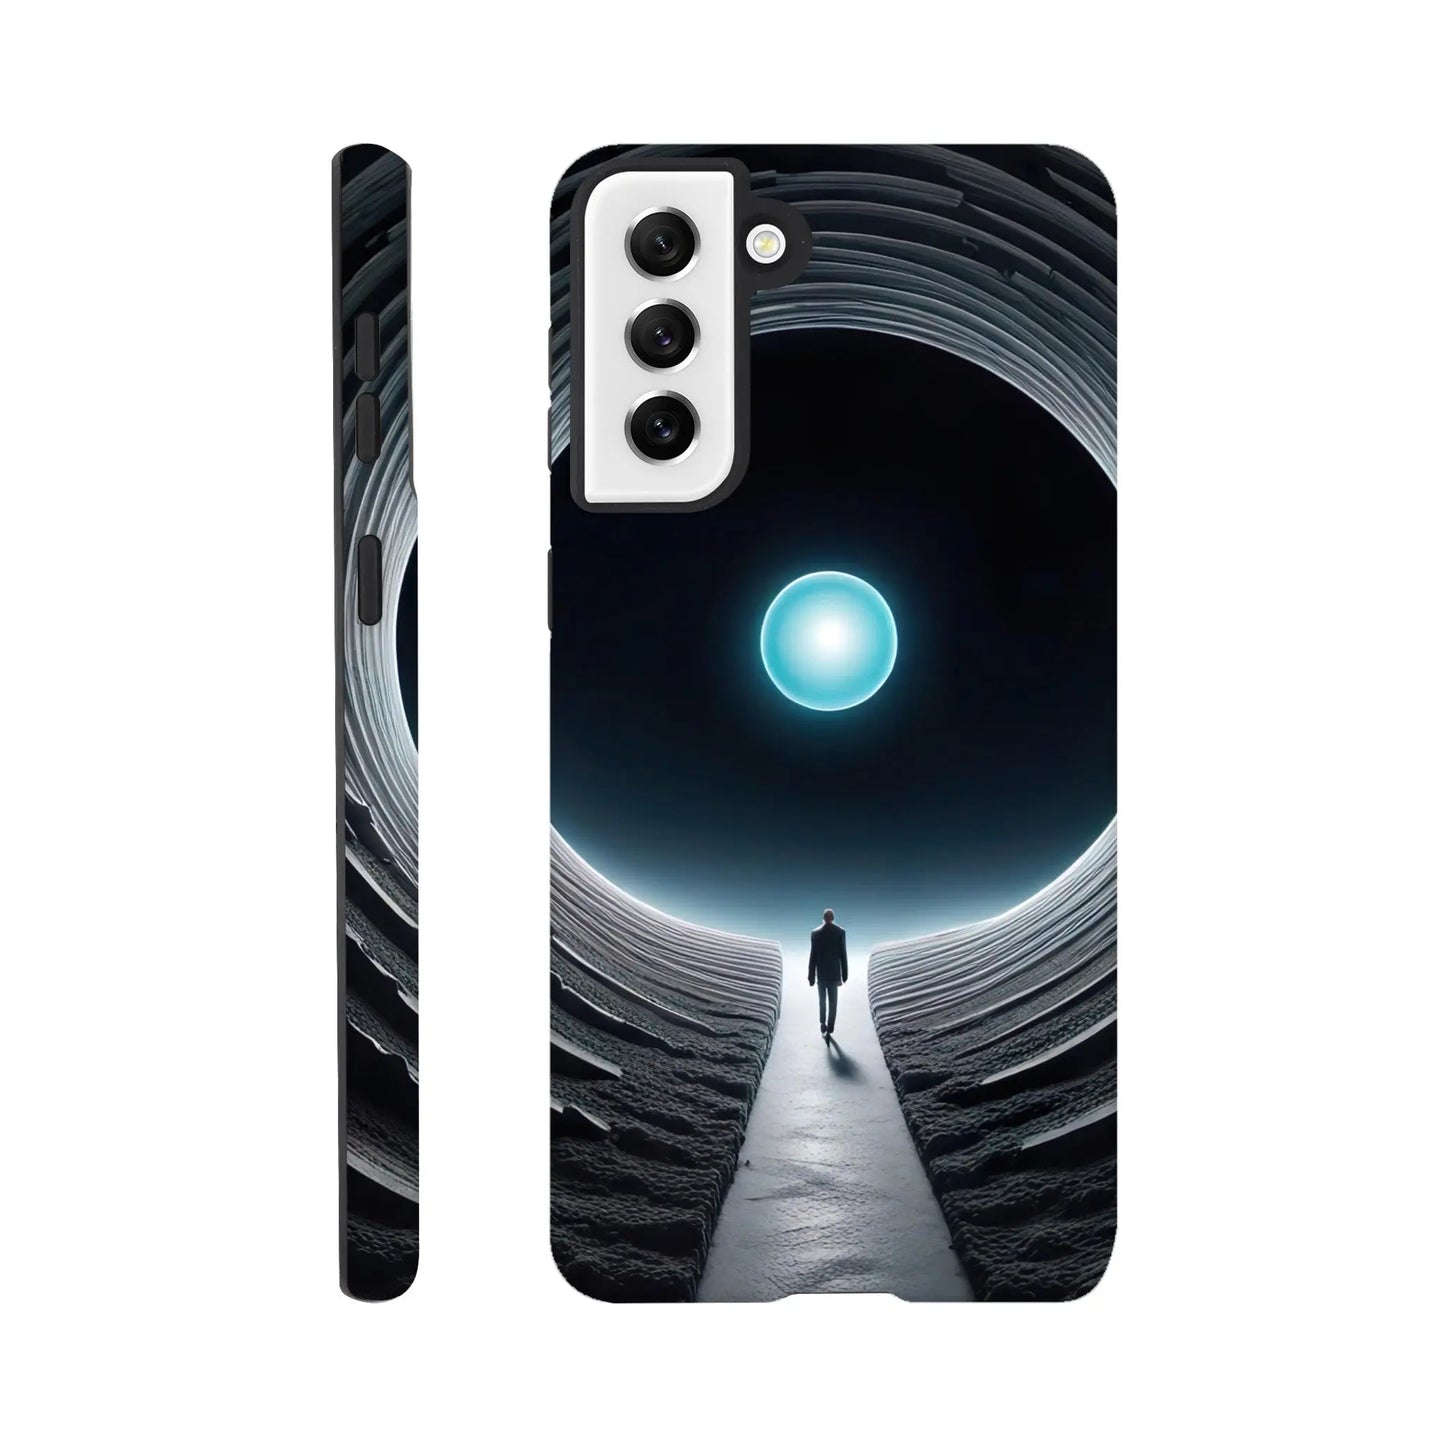 Smartphone-Hülle "Hart" - Weitblick - Digitaler Stil, KI-Kunst RolConArt, Sci-Fi, Galaxy-S21-Plus